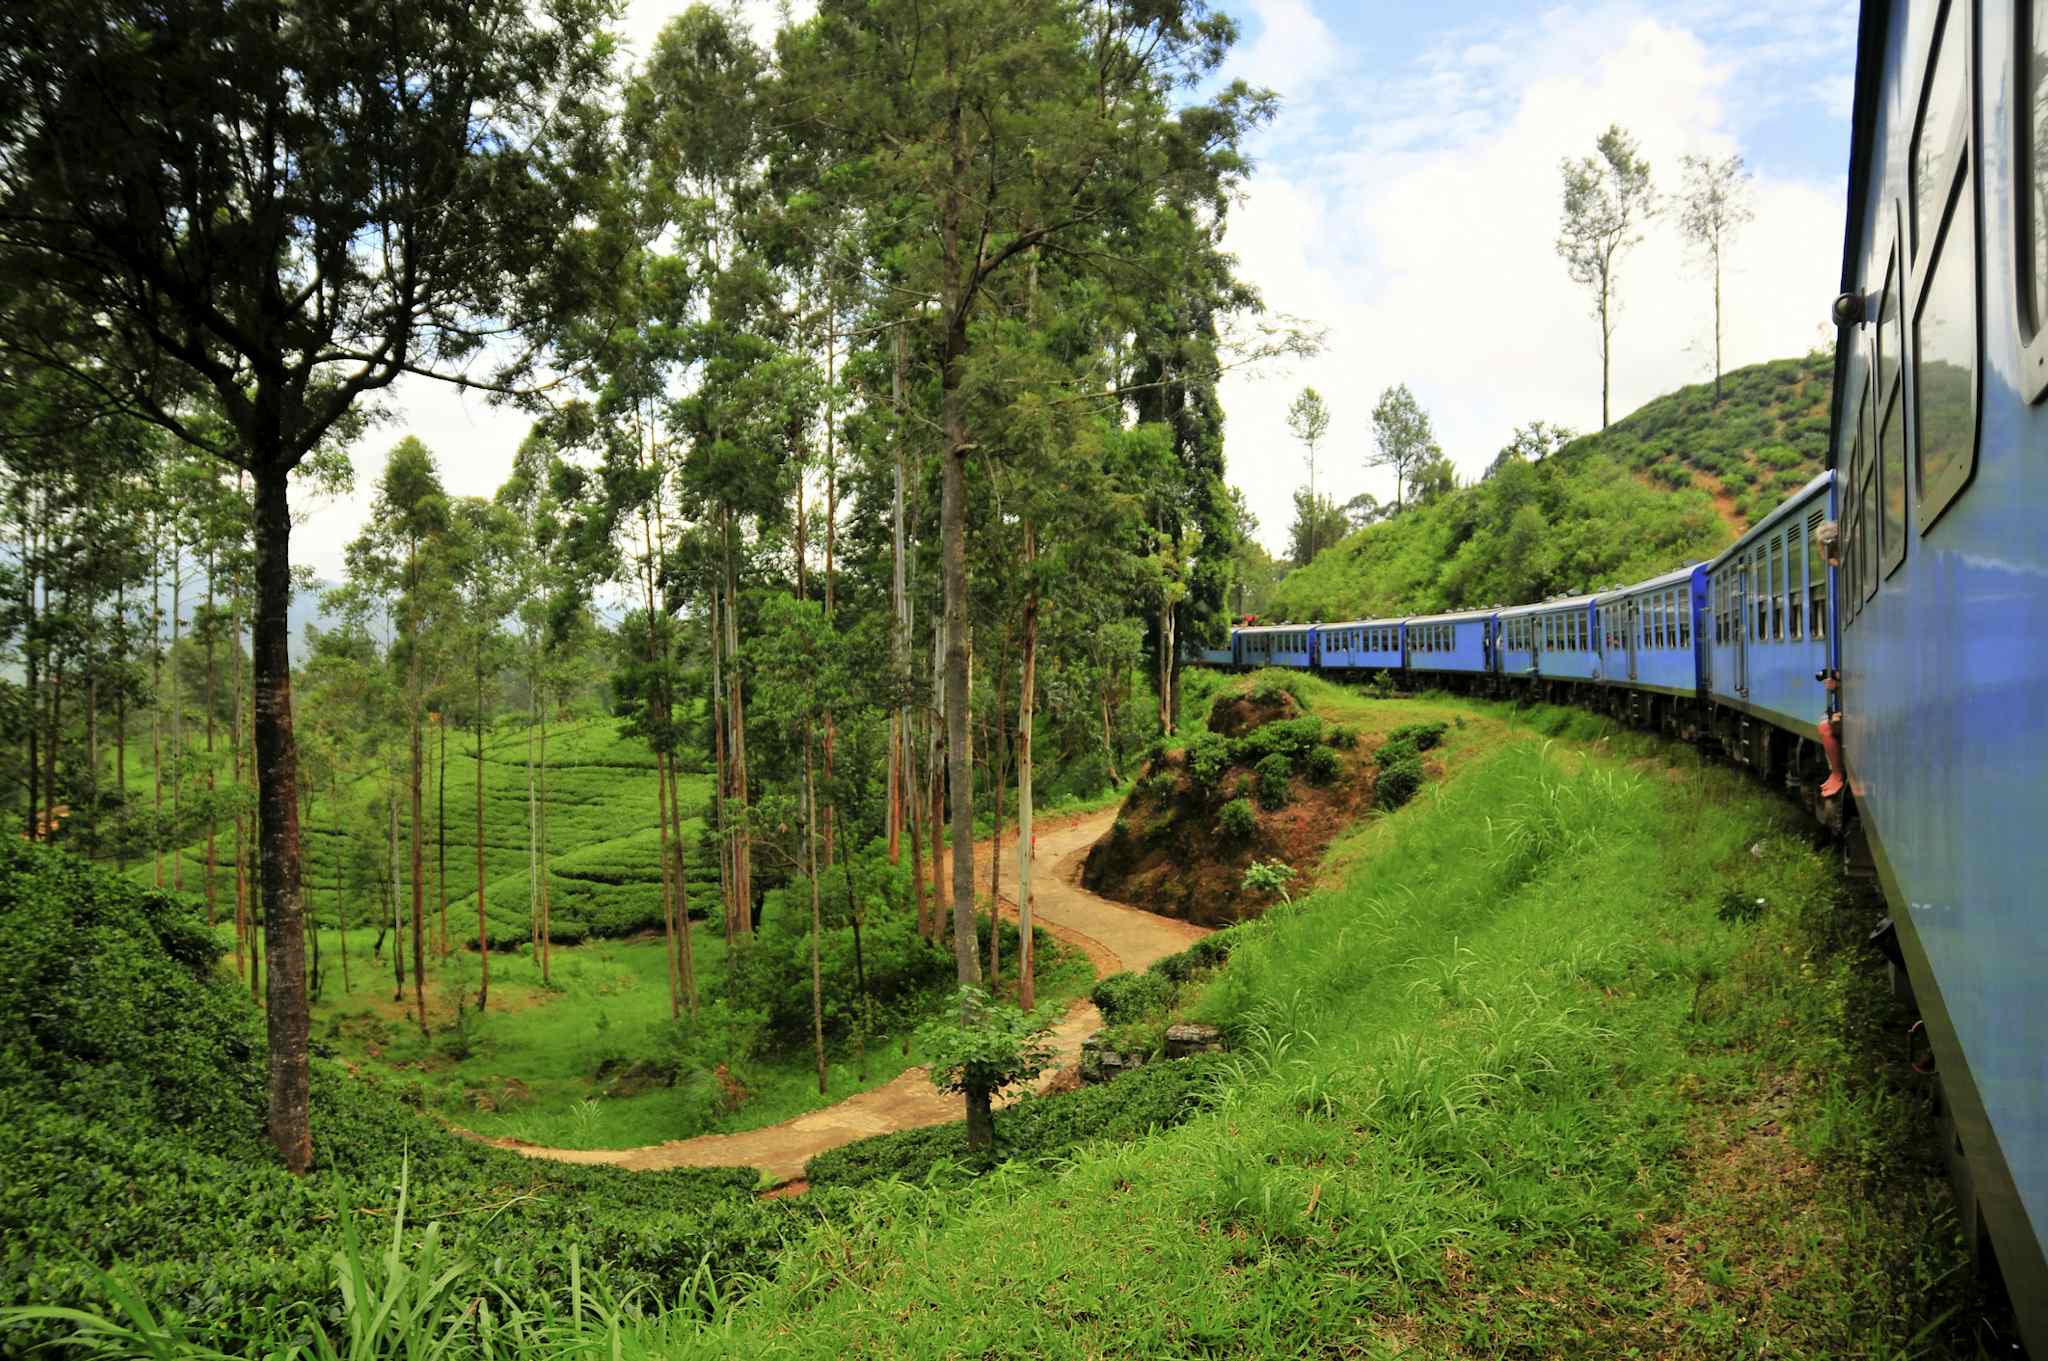 Train from Kandy, Sri Lanka.